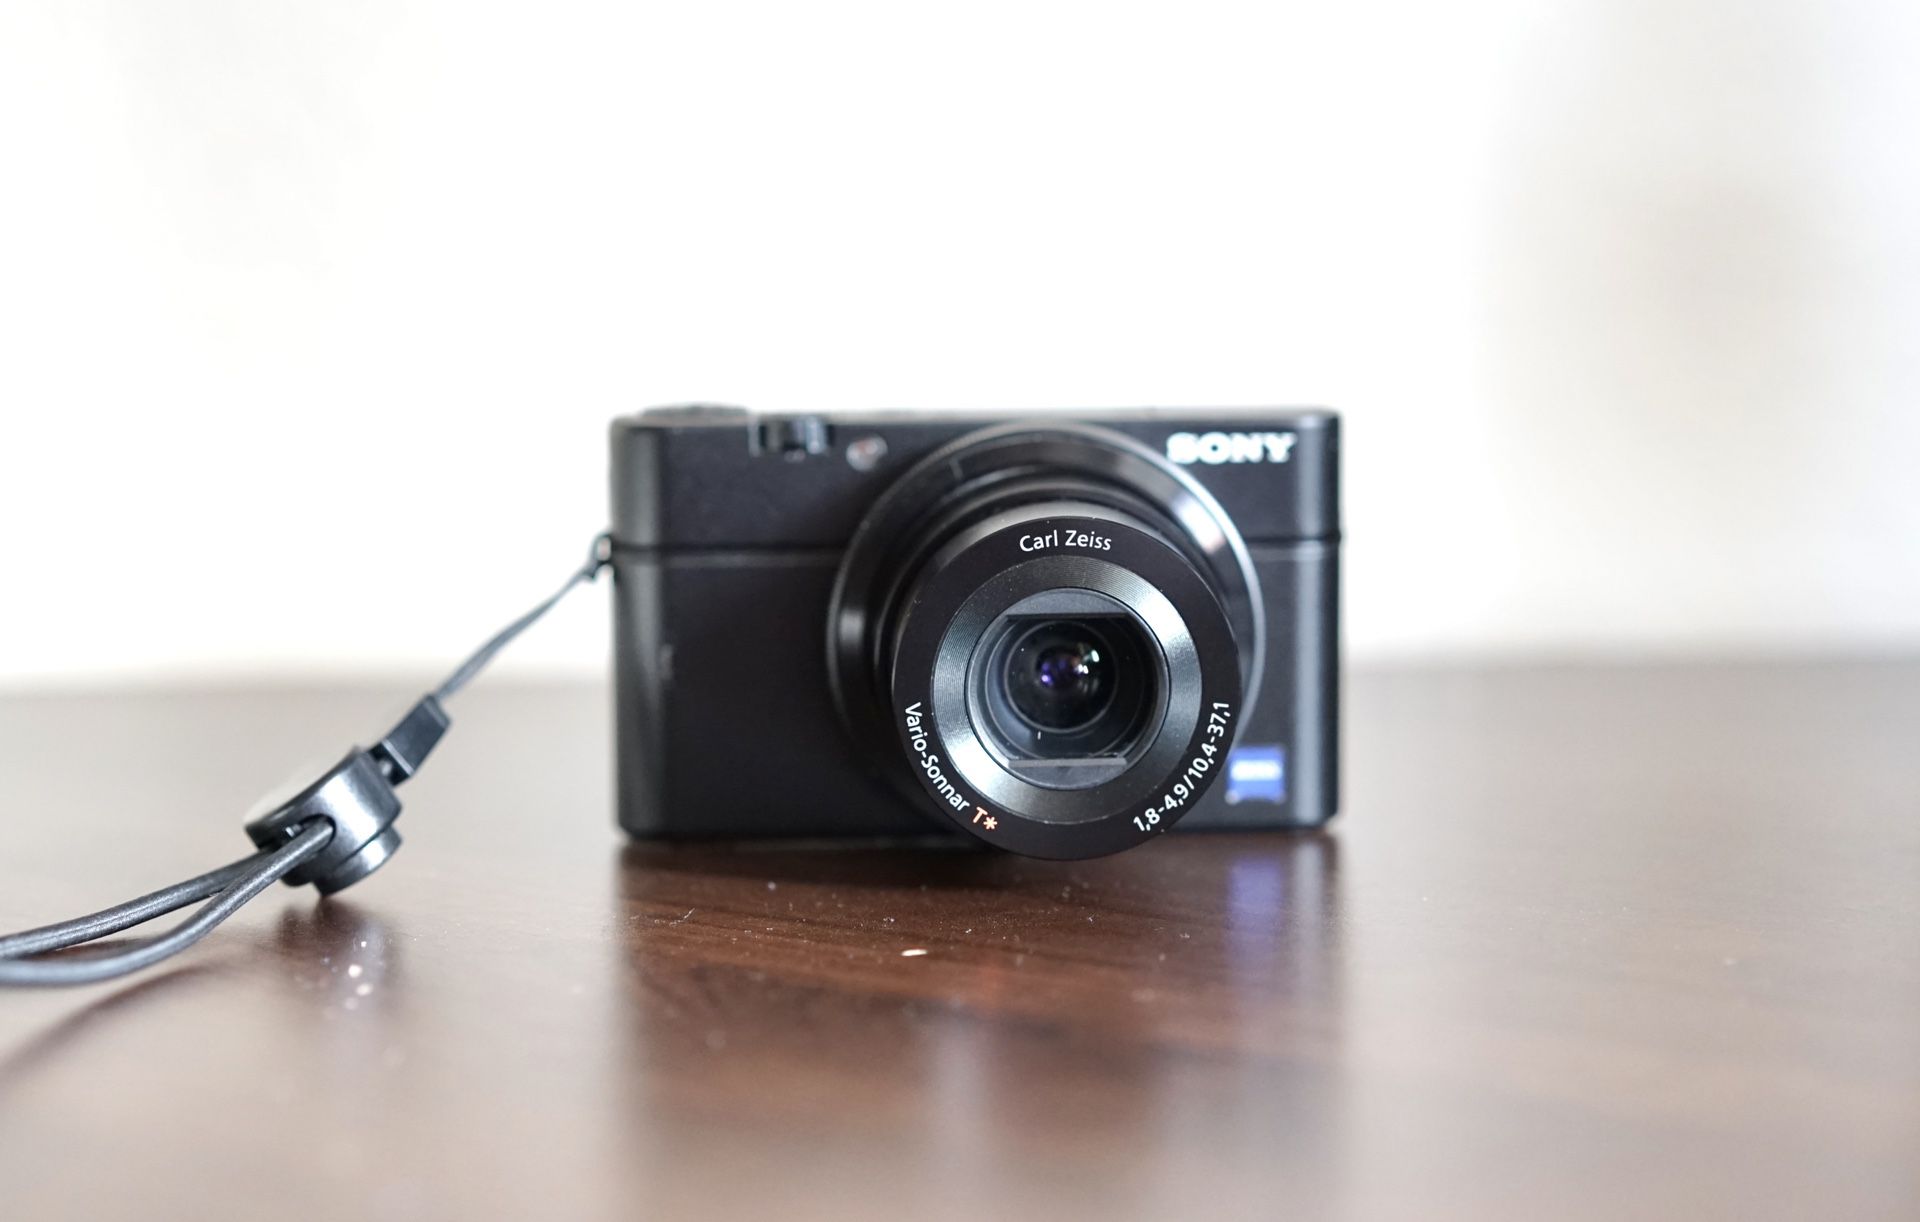 Sony Cyber-shot DSC-RX100 Model 1 20.2 MP Digital SLR Camera - Black